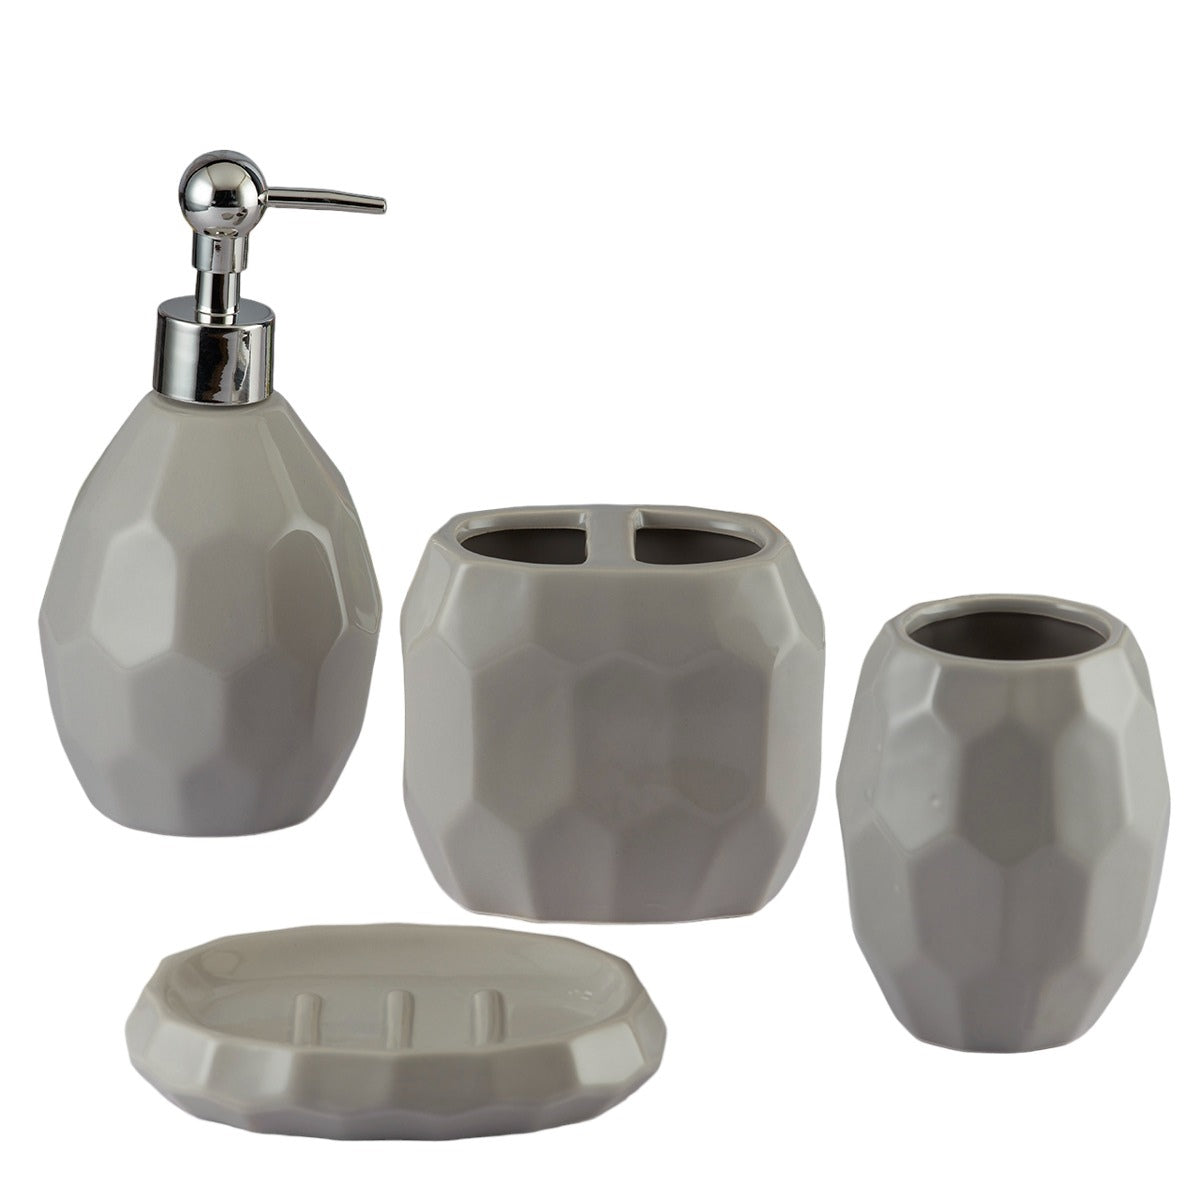 Ceramic Bathroom Accessories Set of 4 Bath Set with Soap Dispenser (8106)